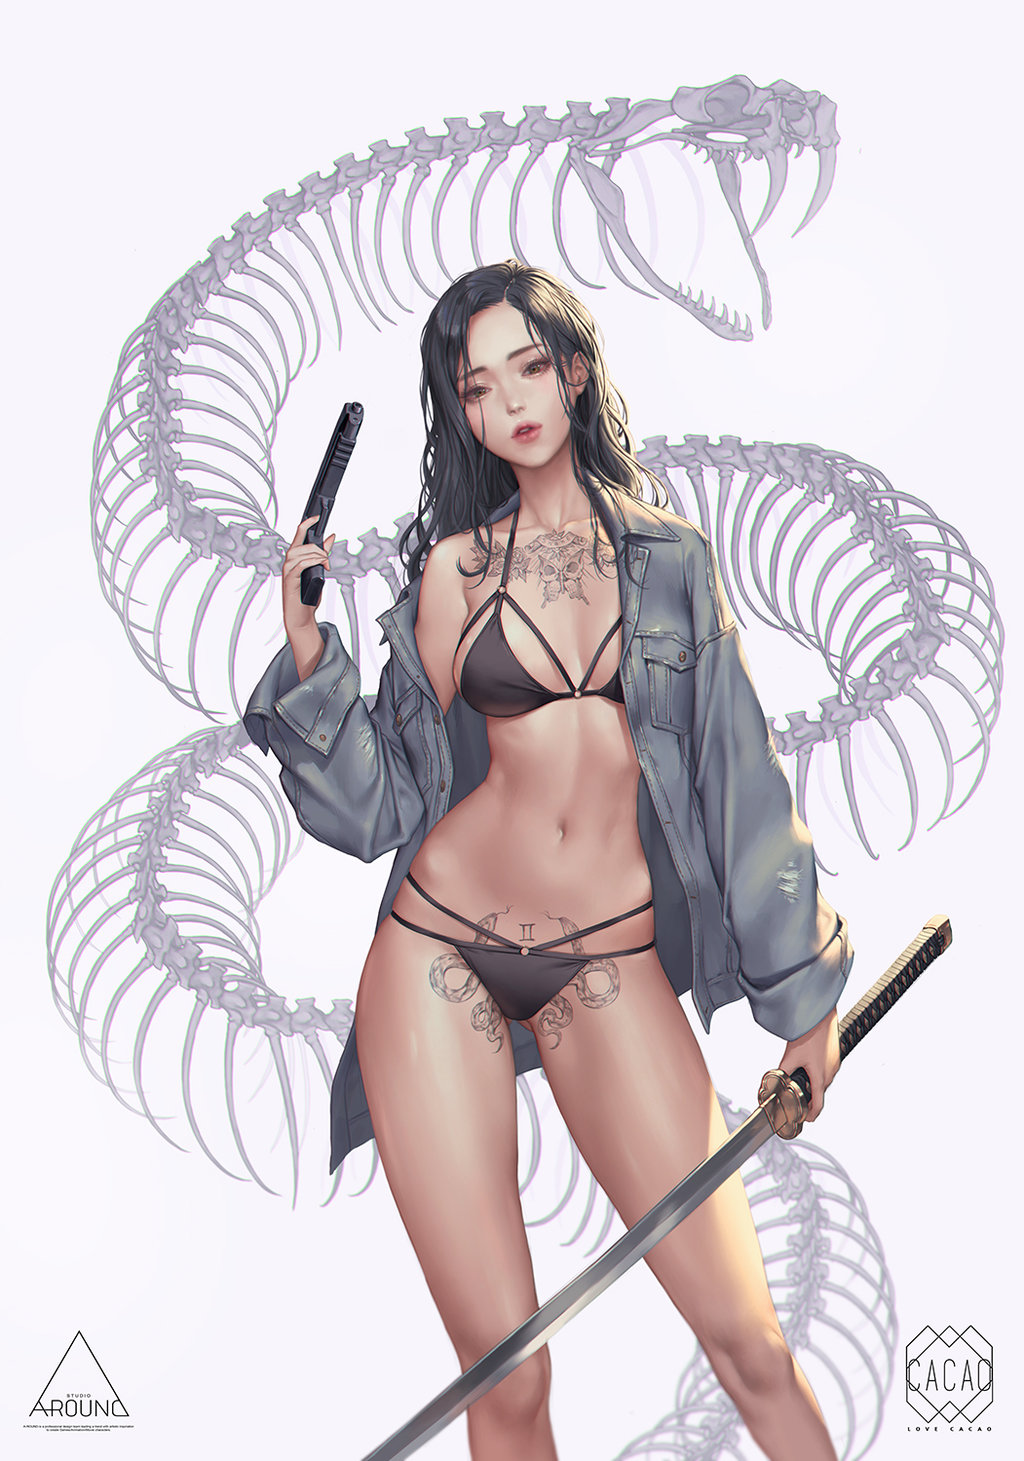 General 1024x1461 Lovecacao drawing women long hair wet hair tattoo jacket lingerie straps bra panties bones pistol